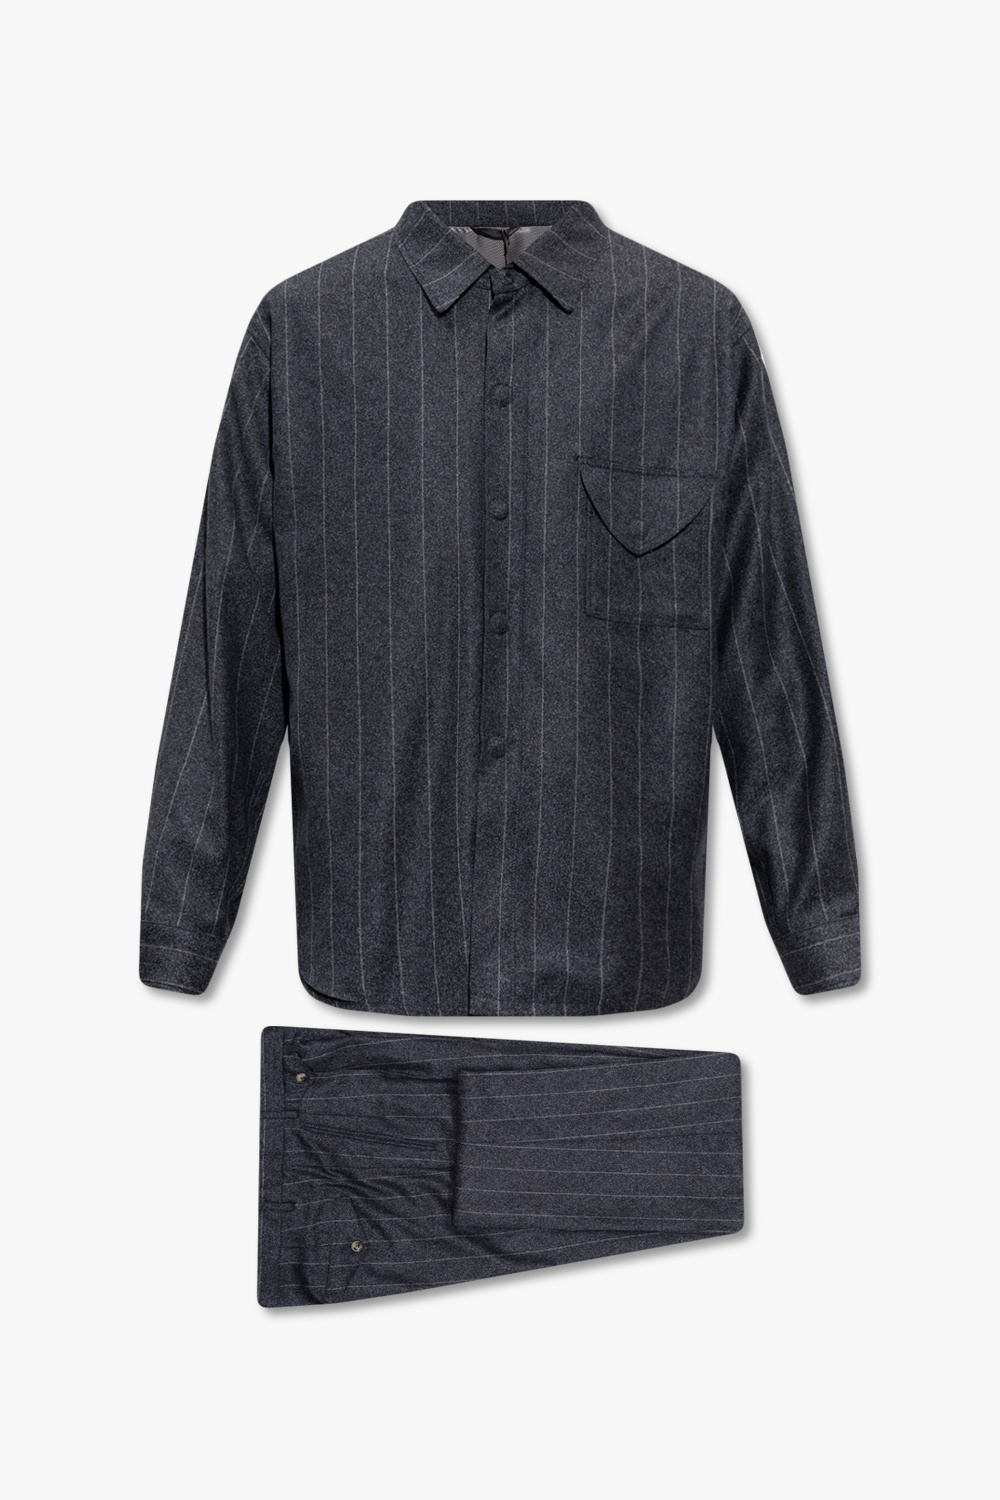 Giorgio Armani Shirt & trousers set